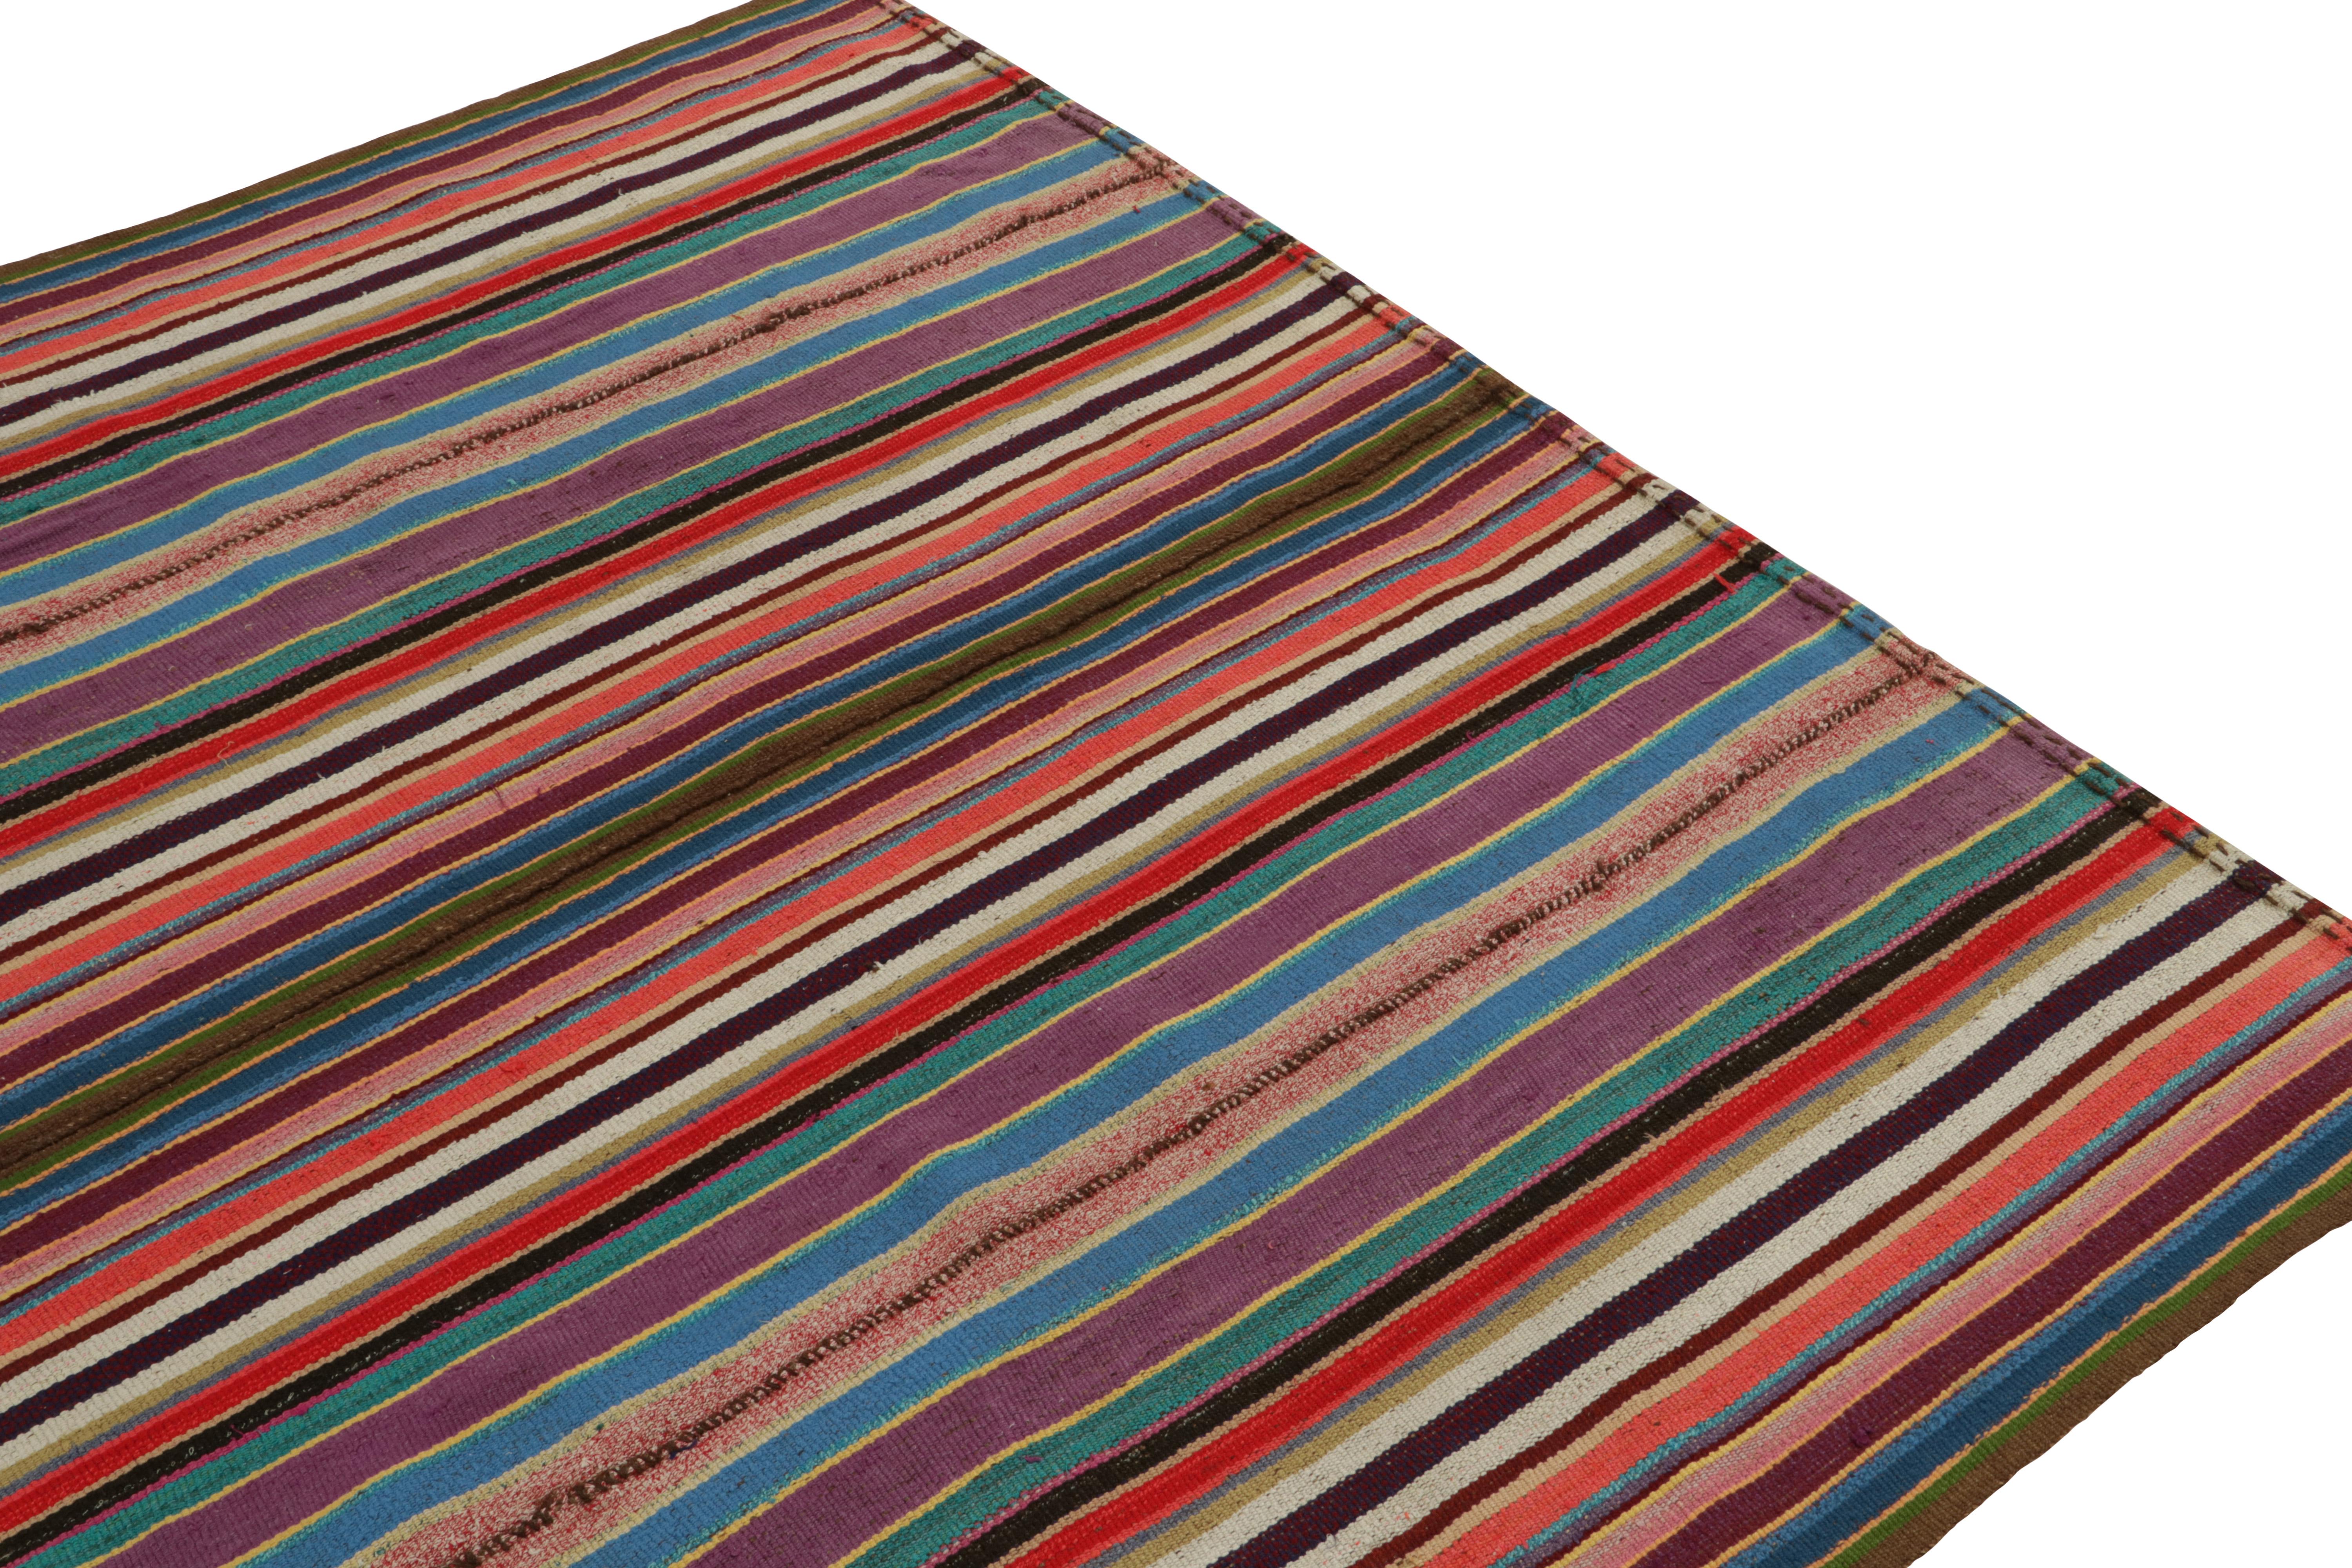 Turkish 1950s Vintage Chaput Kilim Rug in Multicolor Stripes, Patterns by Rug & Kilim For Sale